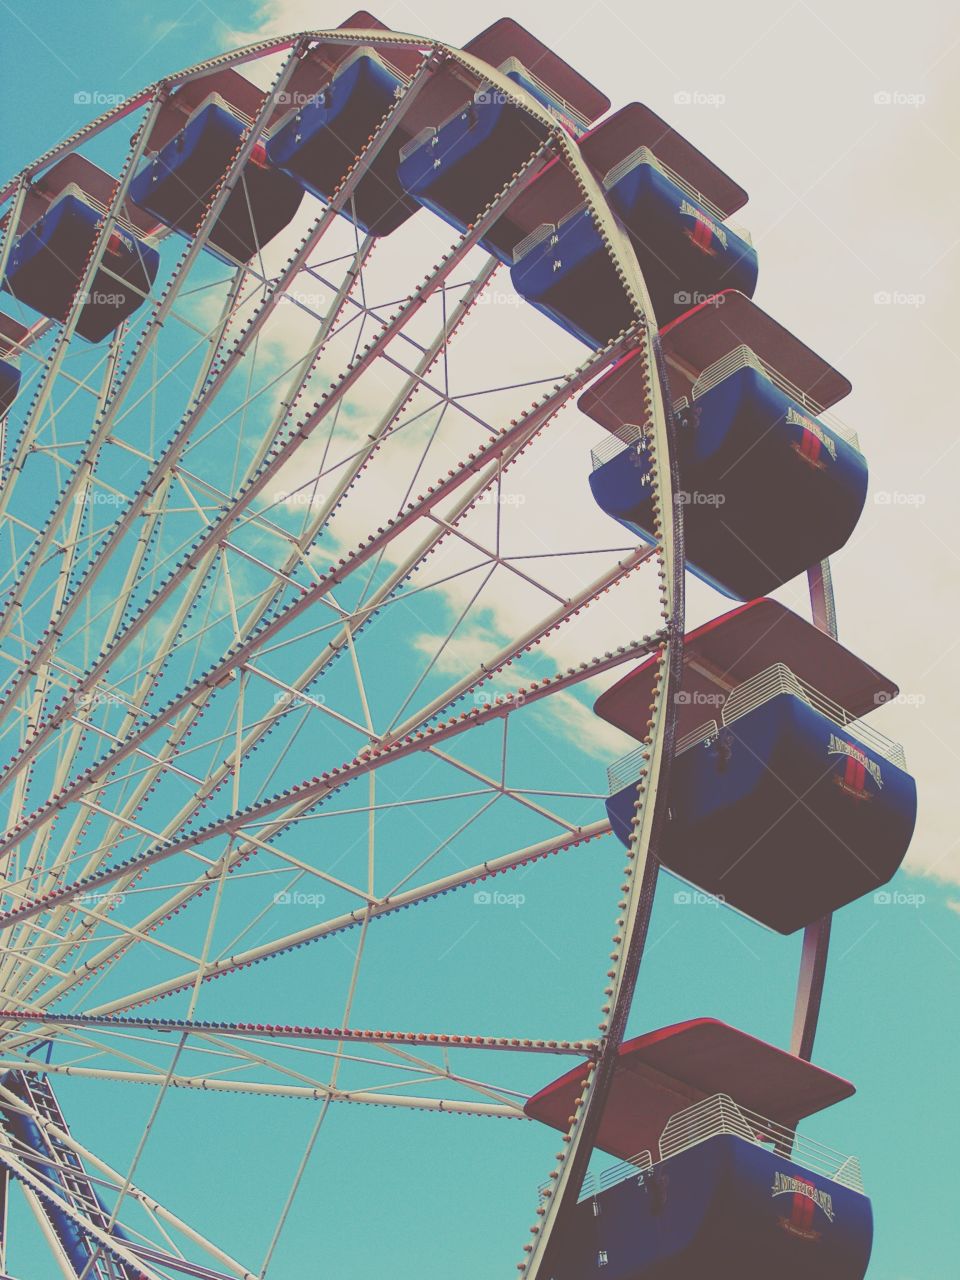 Abandoned Ferris Wheel, Amusement Park At Ferris Wheel, Ferris Wheel In The Sky, Wheel In The Clouds, Colorful Wheel